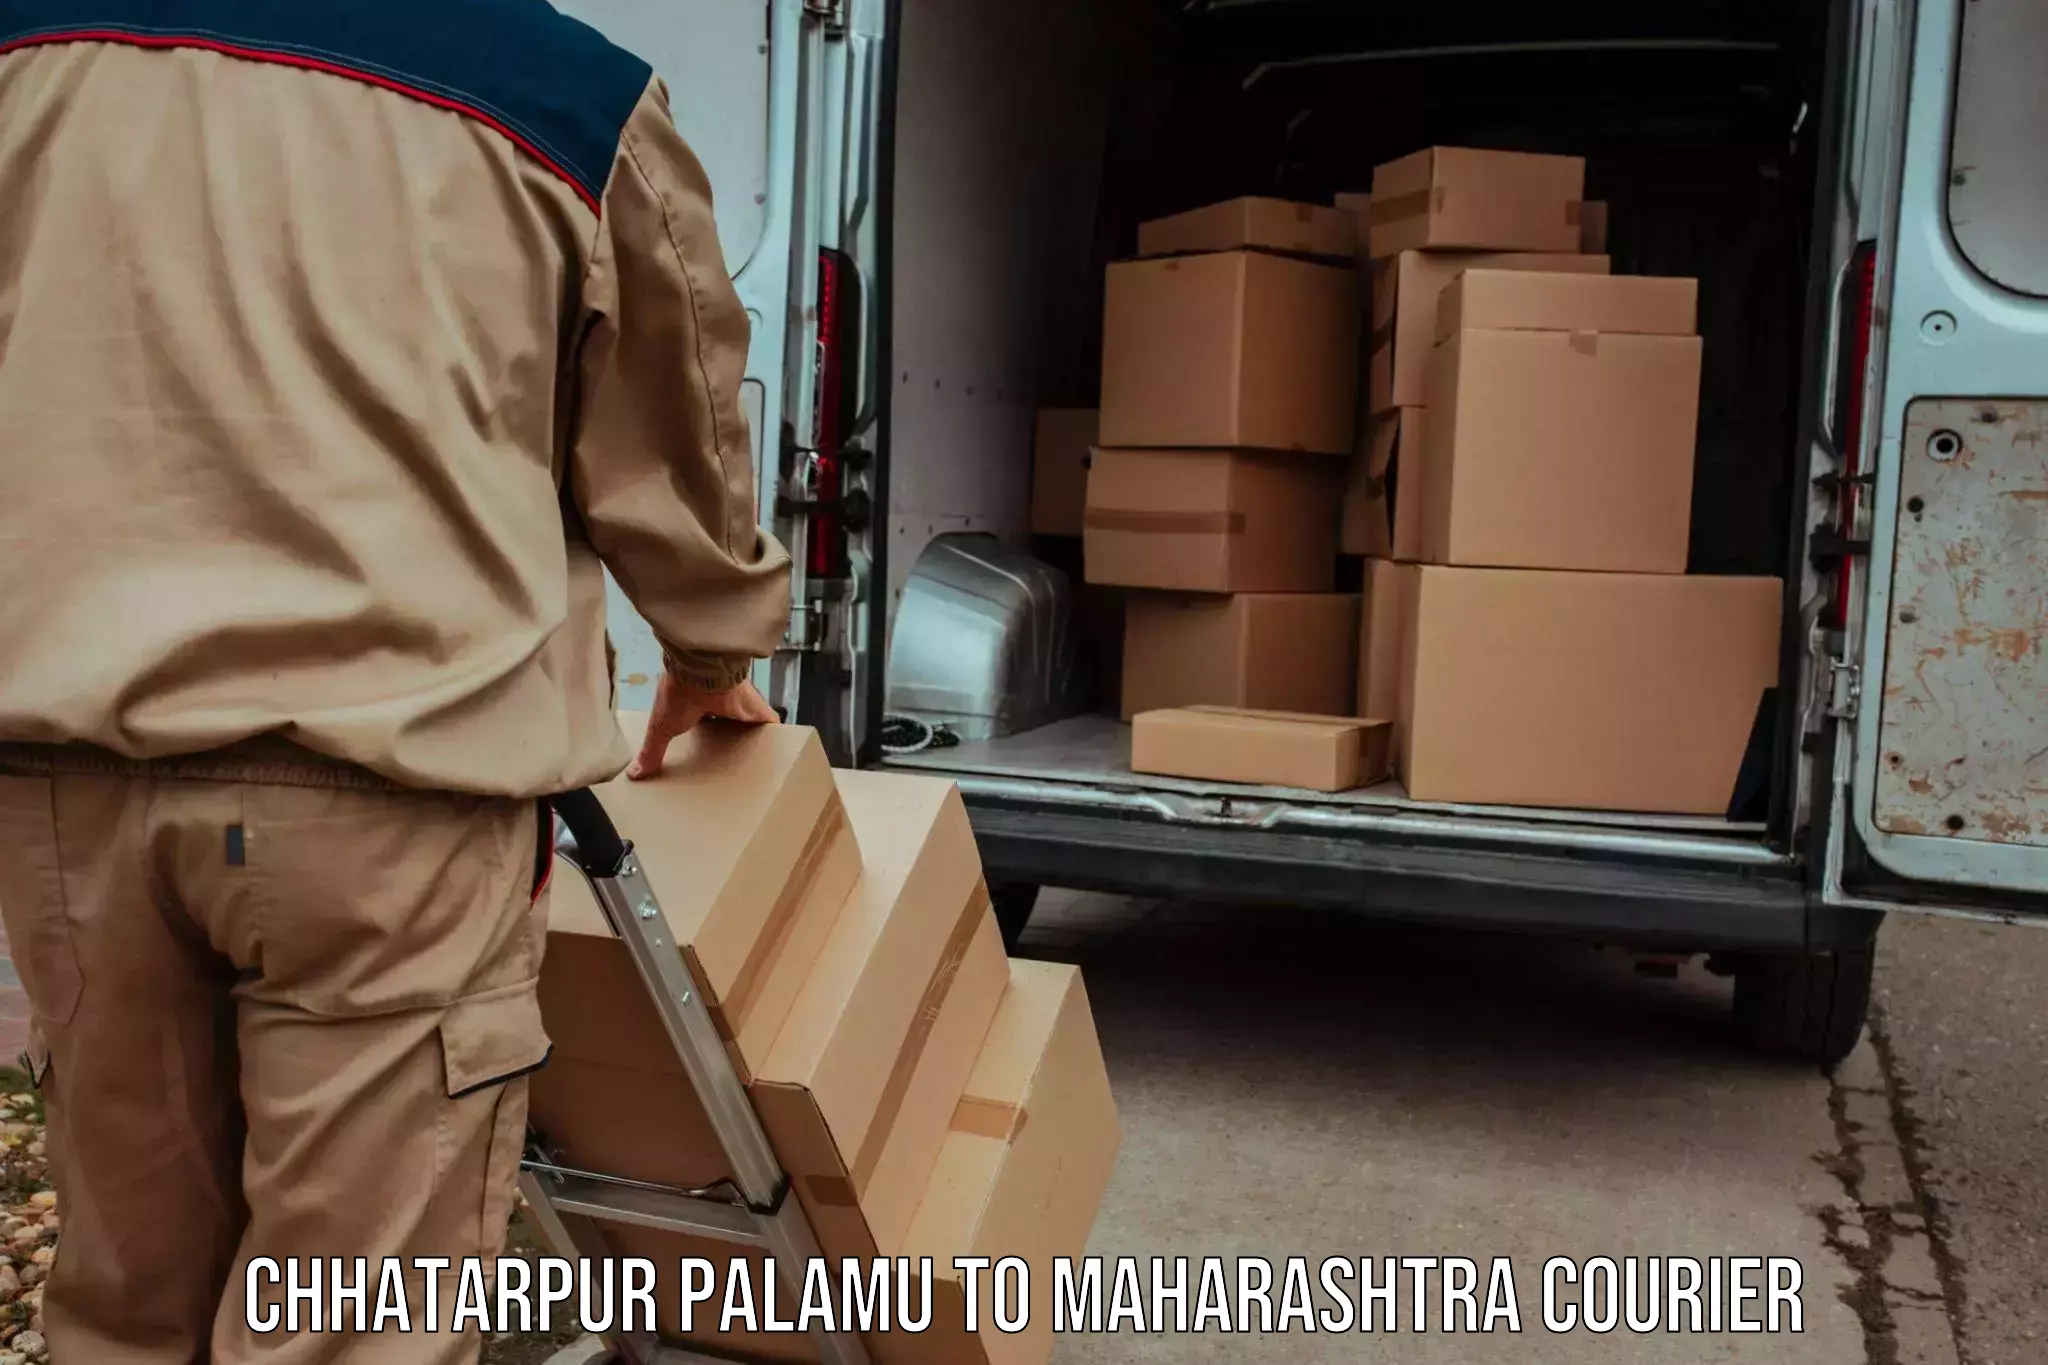 Multi-service courier options Chhatarpur Palamu to Dusarbid